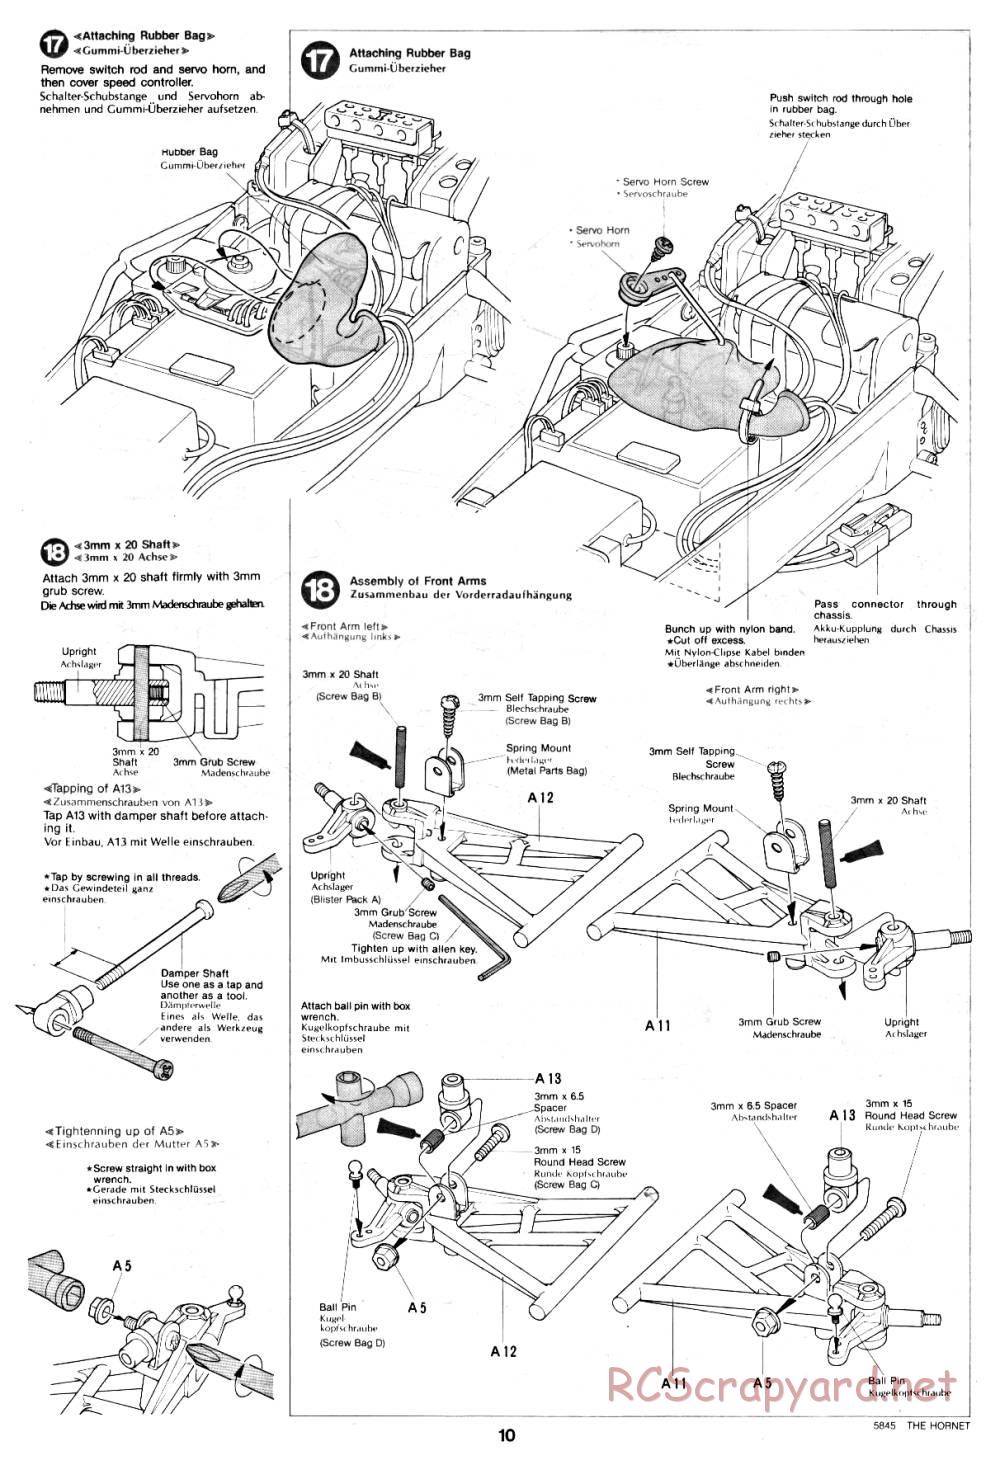 Tamiya - The Hornet - 58045 - Manual - Page 10